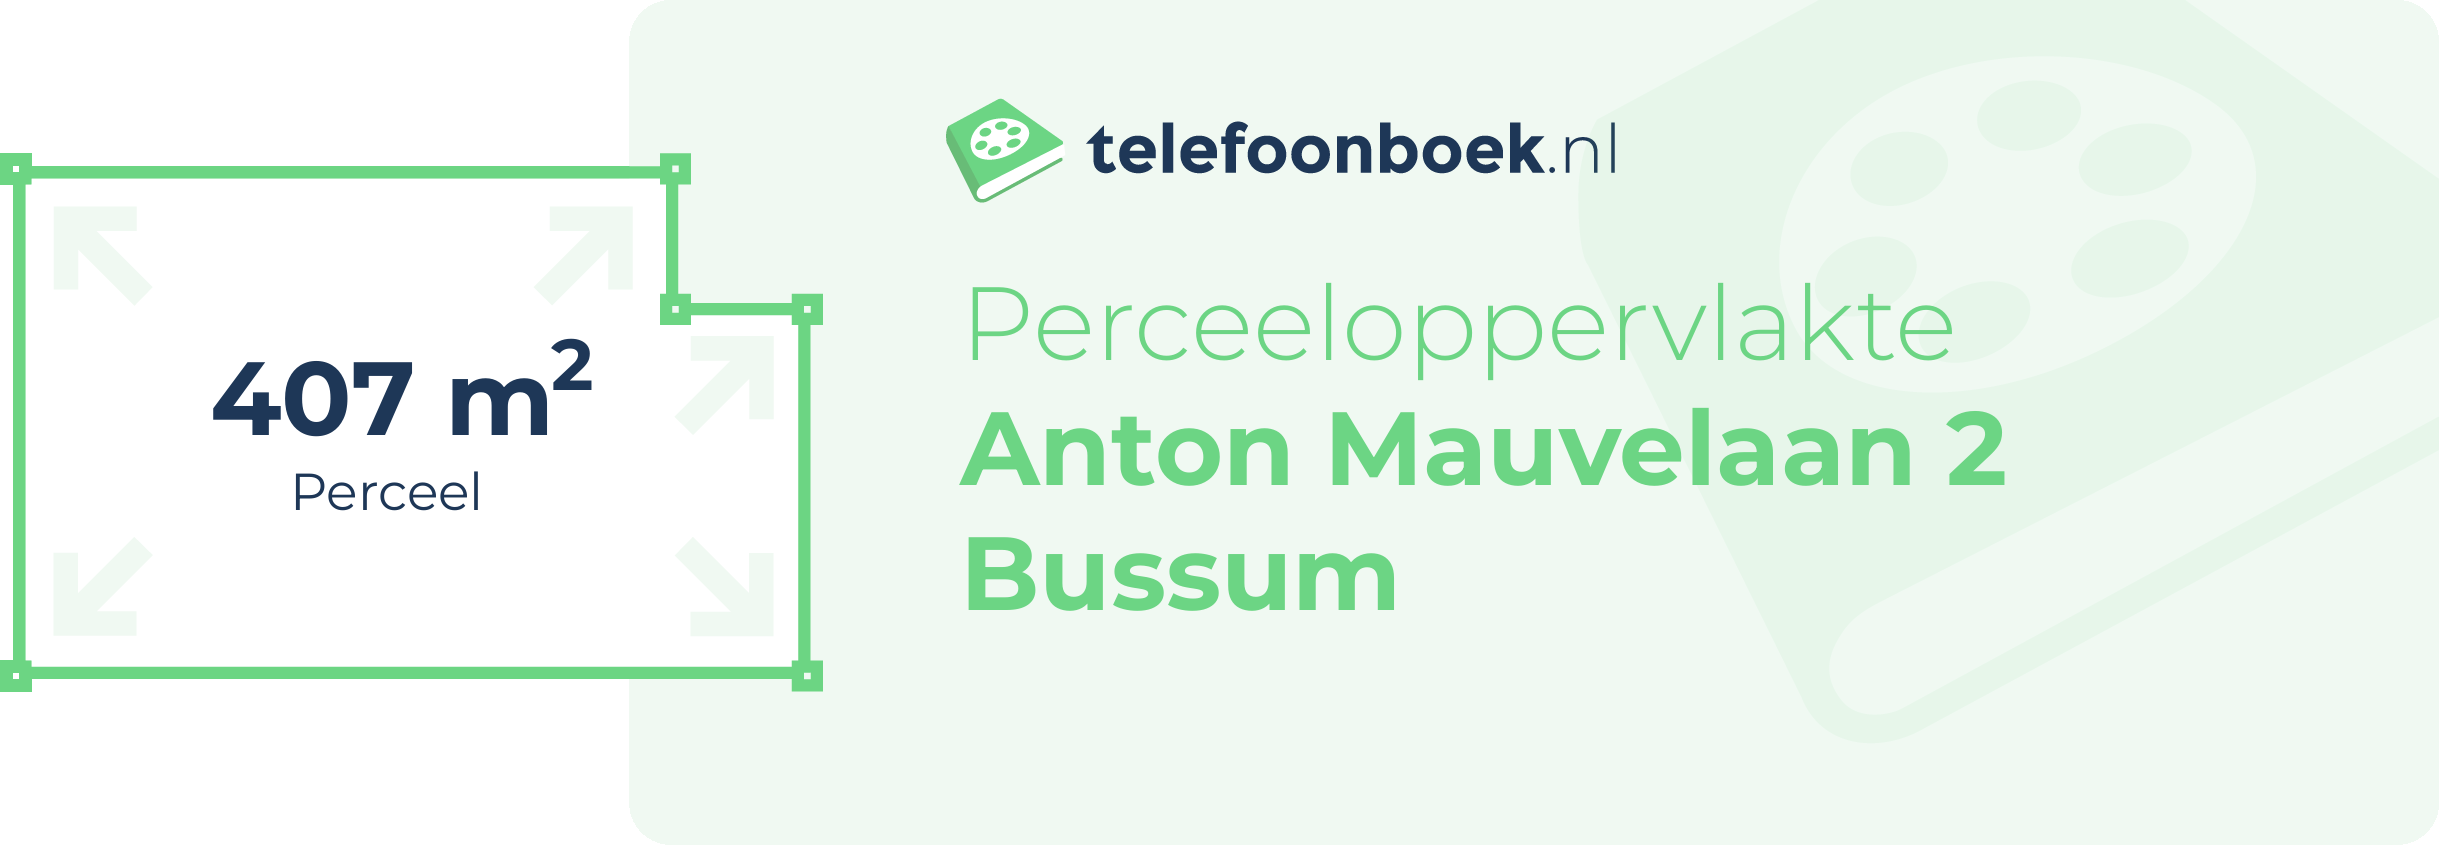 Perceeloppervlakte Anton Mauvelaan 2 Bussum